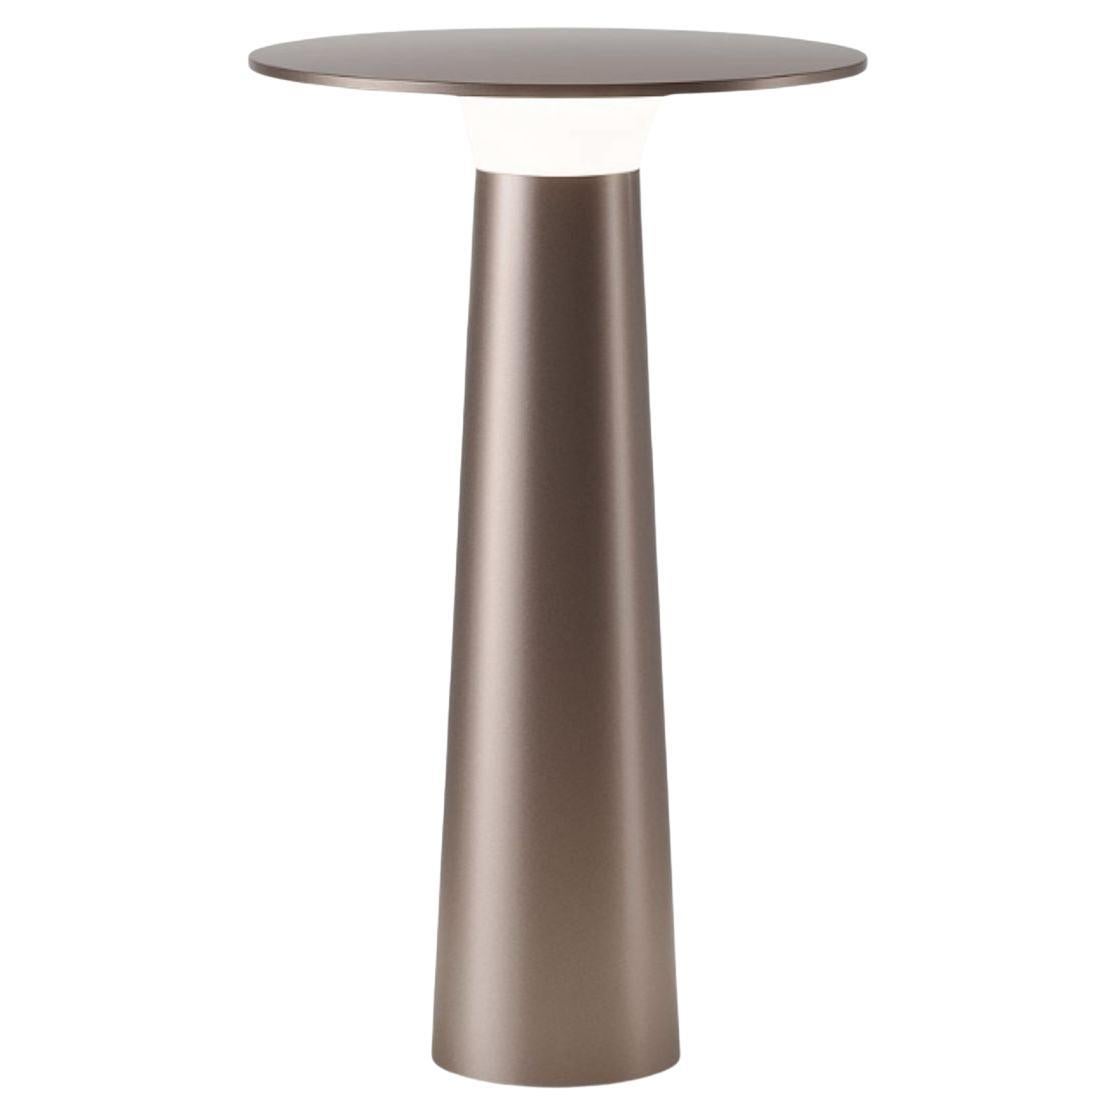 Klaus Nolting 'Lix' Portable Outdoor Aluminum Table Lamp in Bronze for Ip44de